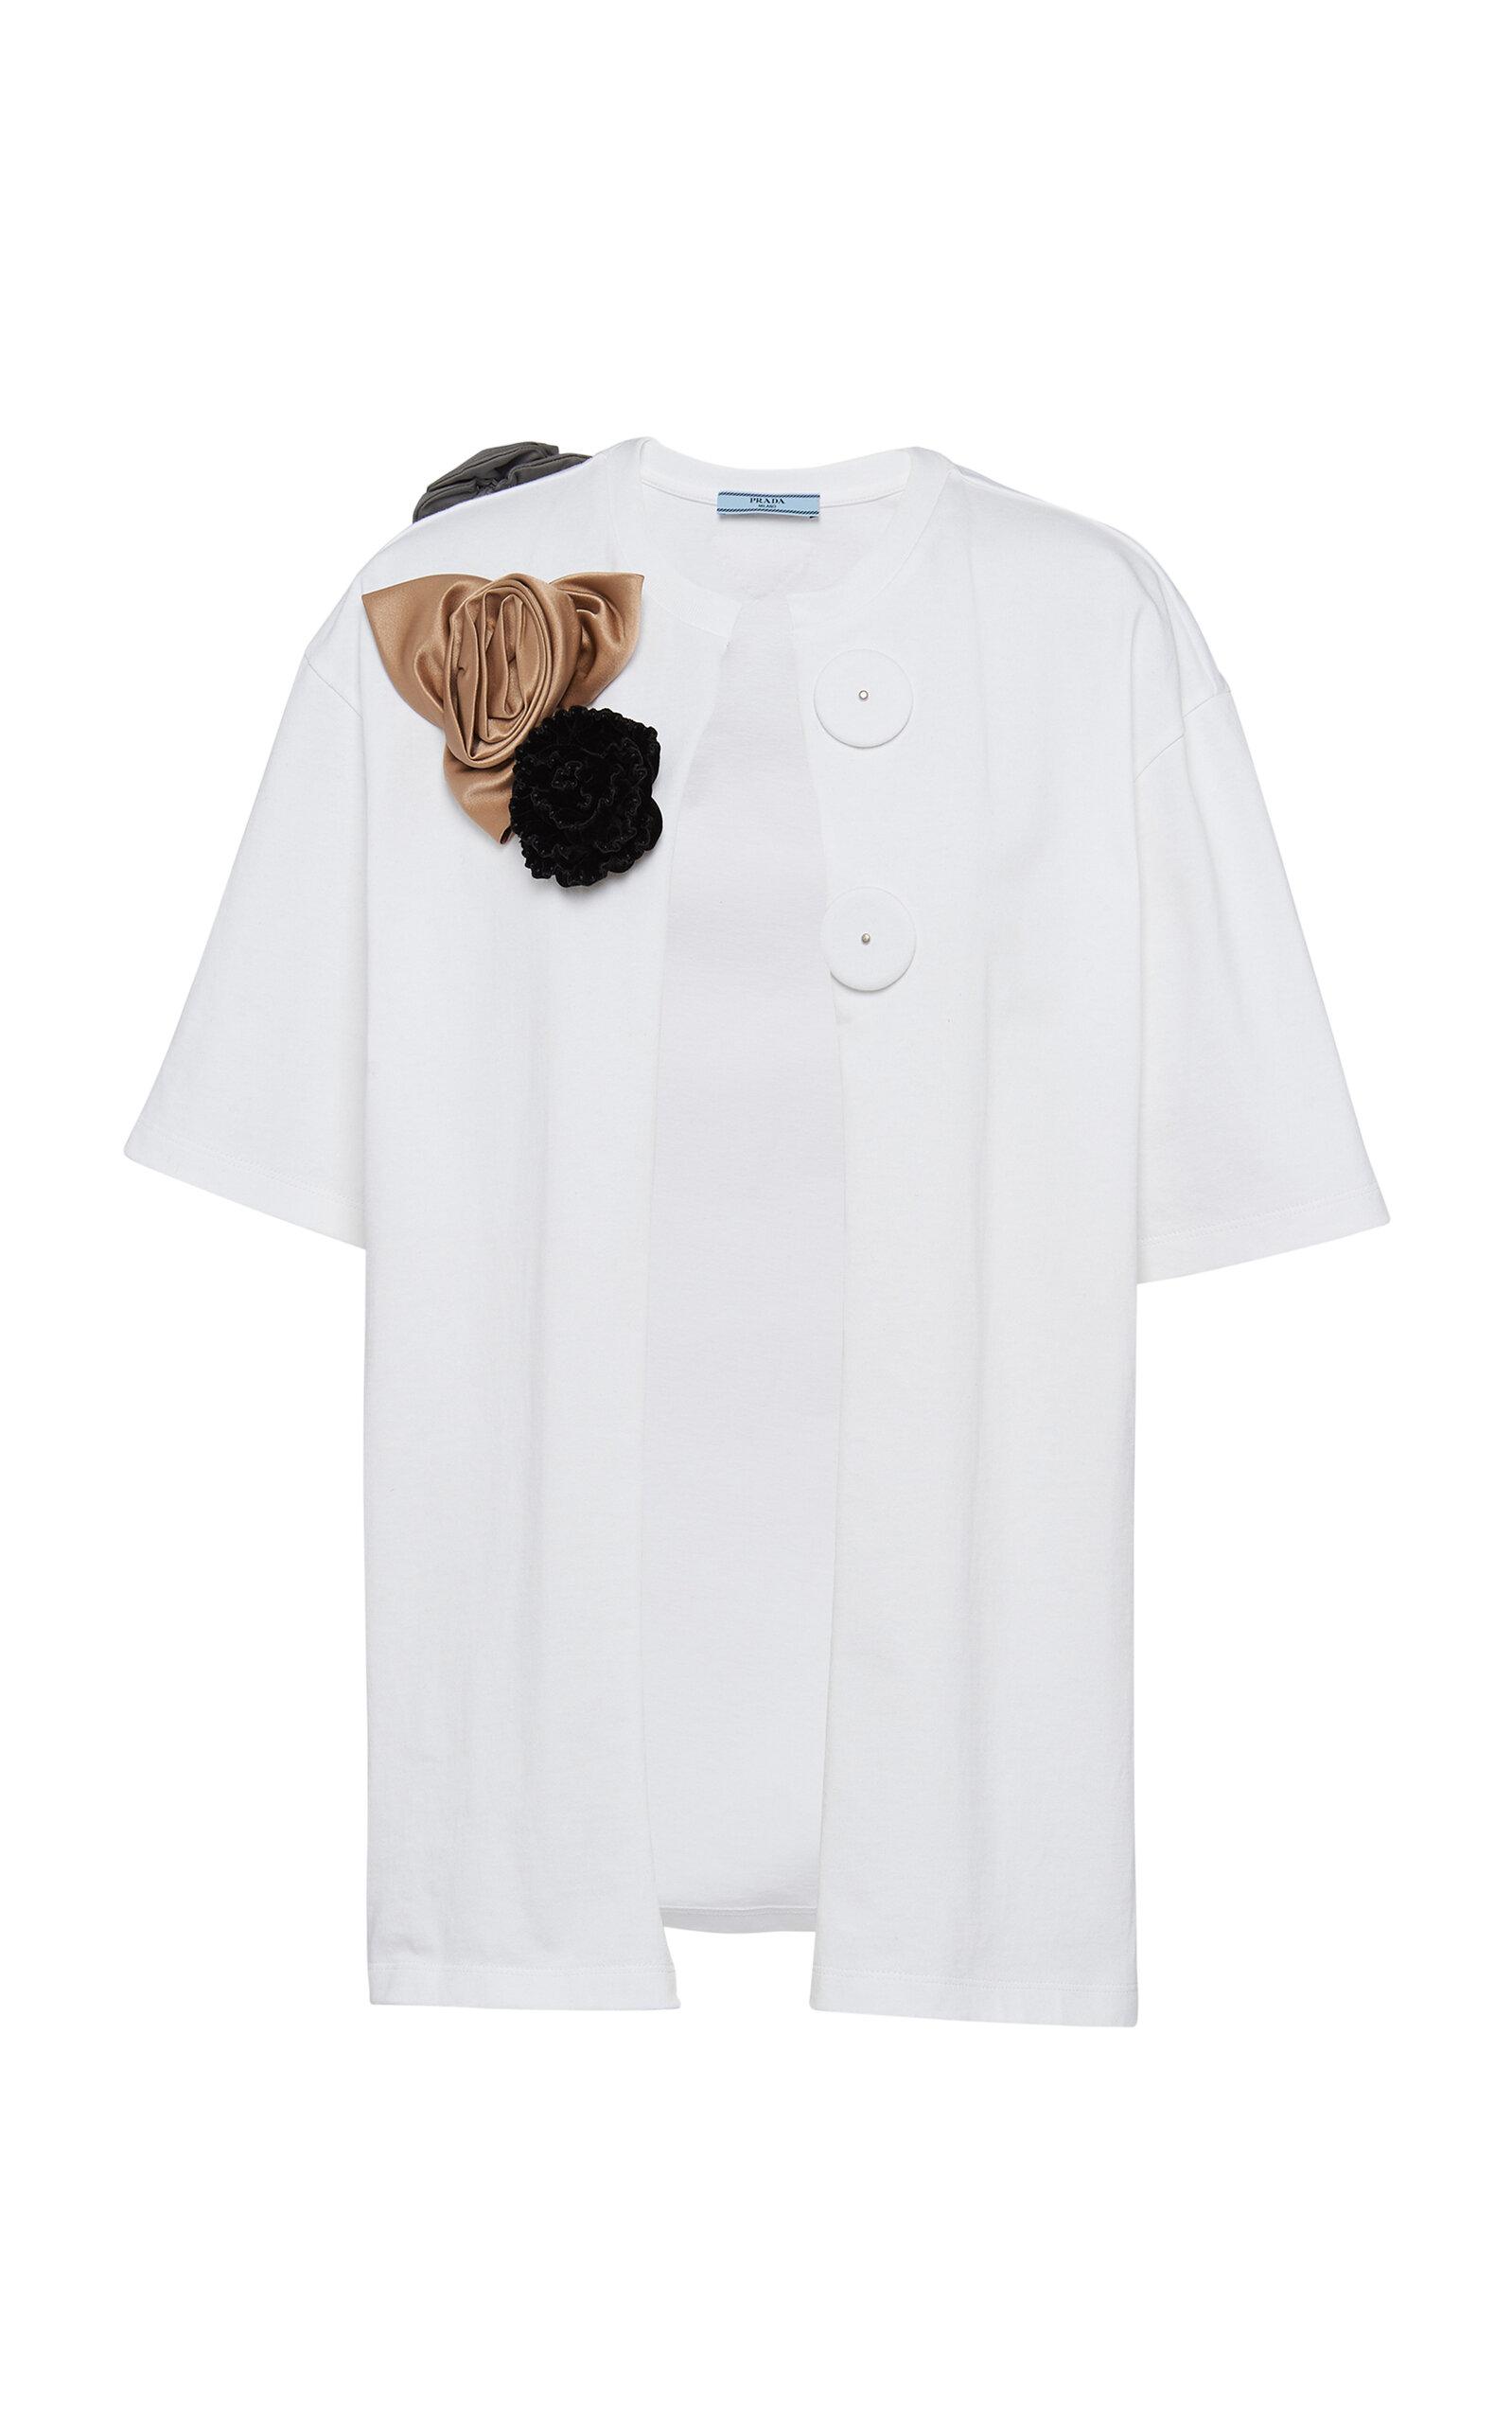 Prada Appliquéd Open Jersey T-shirt in White | Lyst